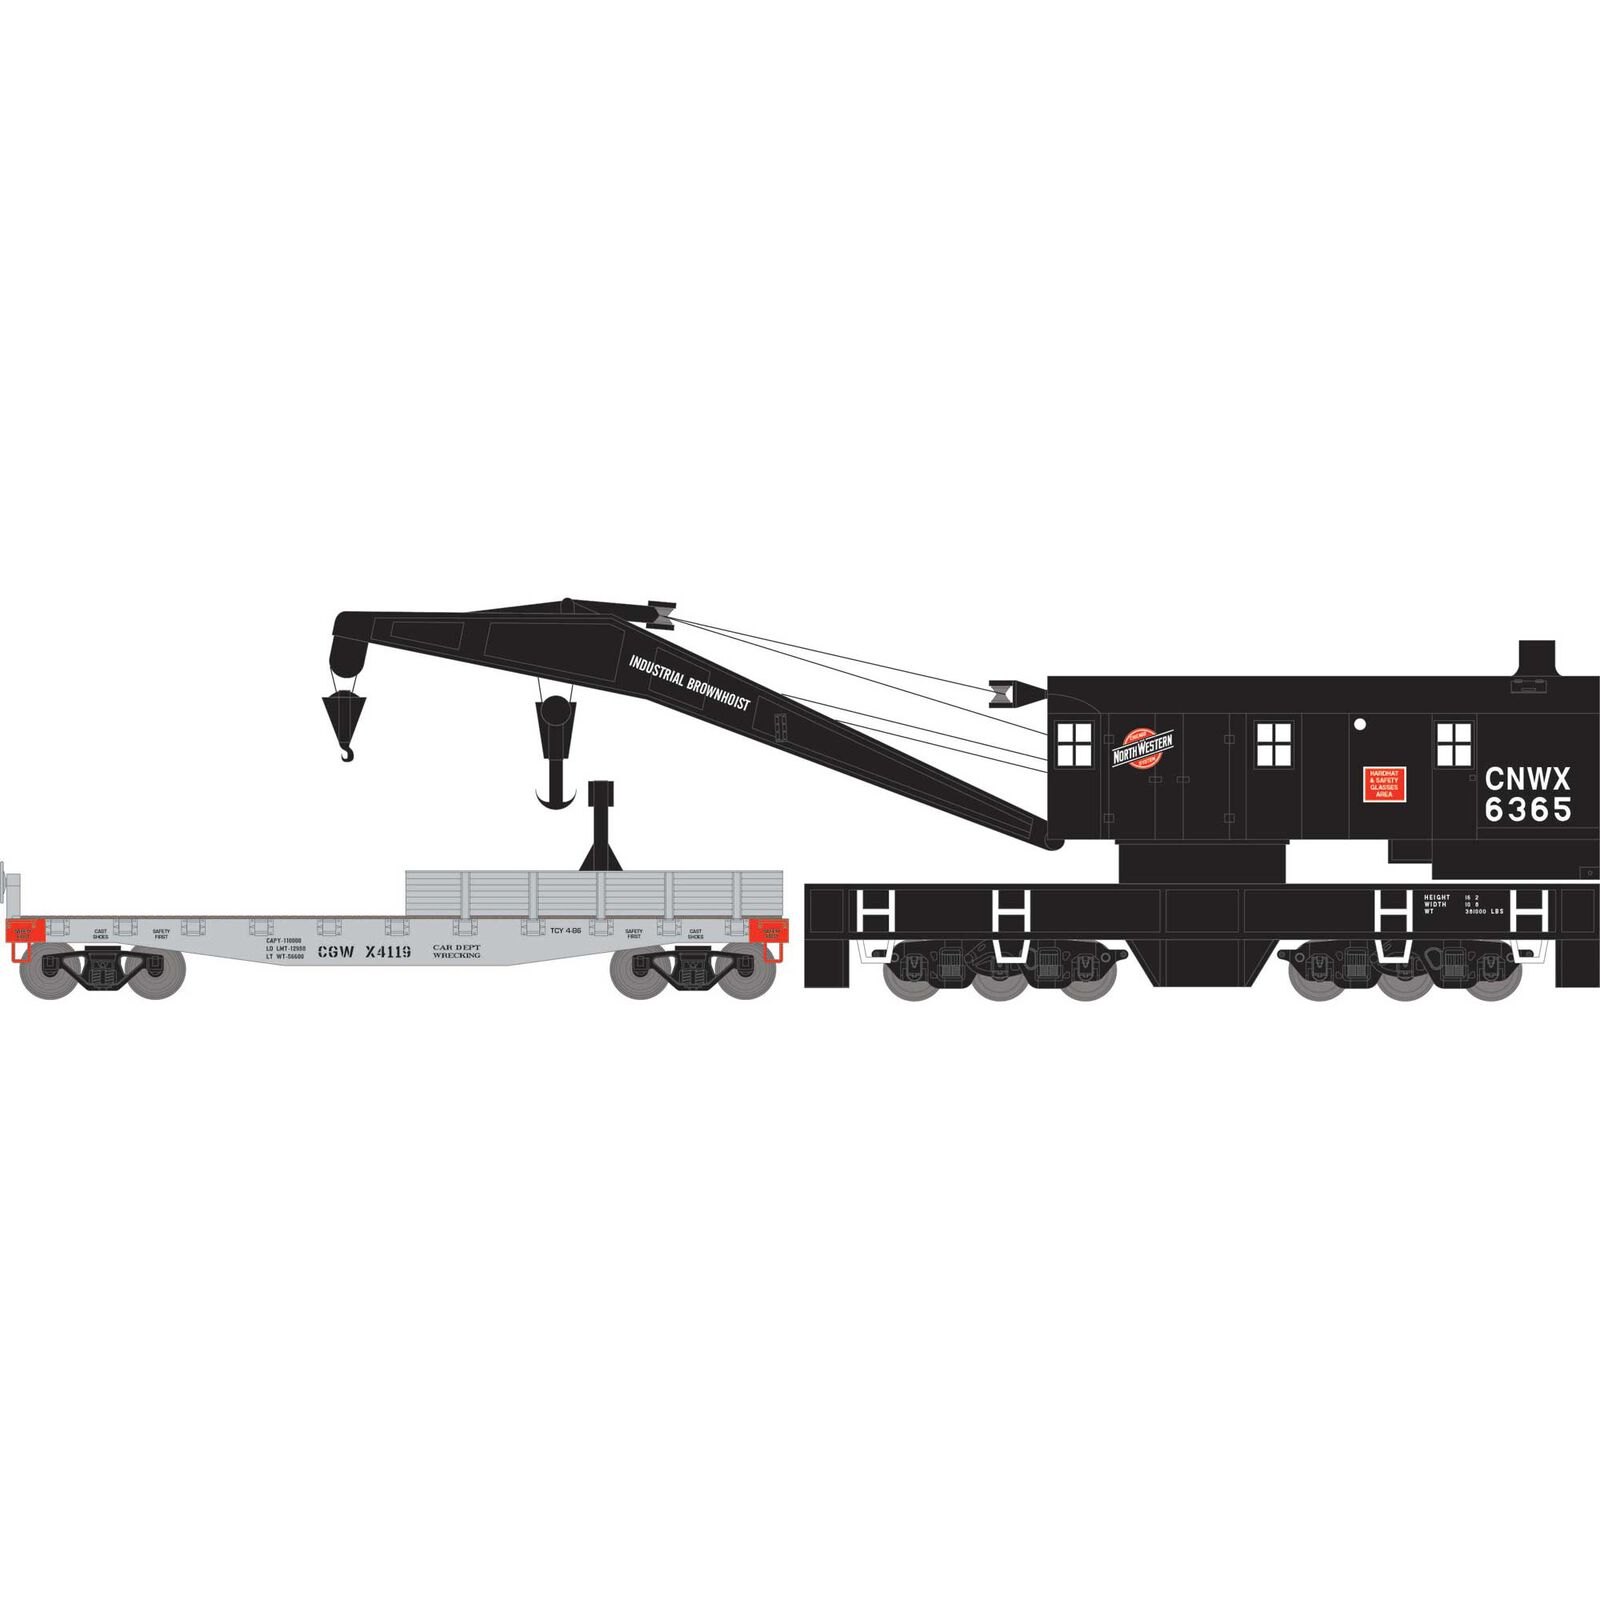 HO 200T Crane / Tender, C&NW / CGW #6365 / X4119